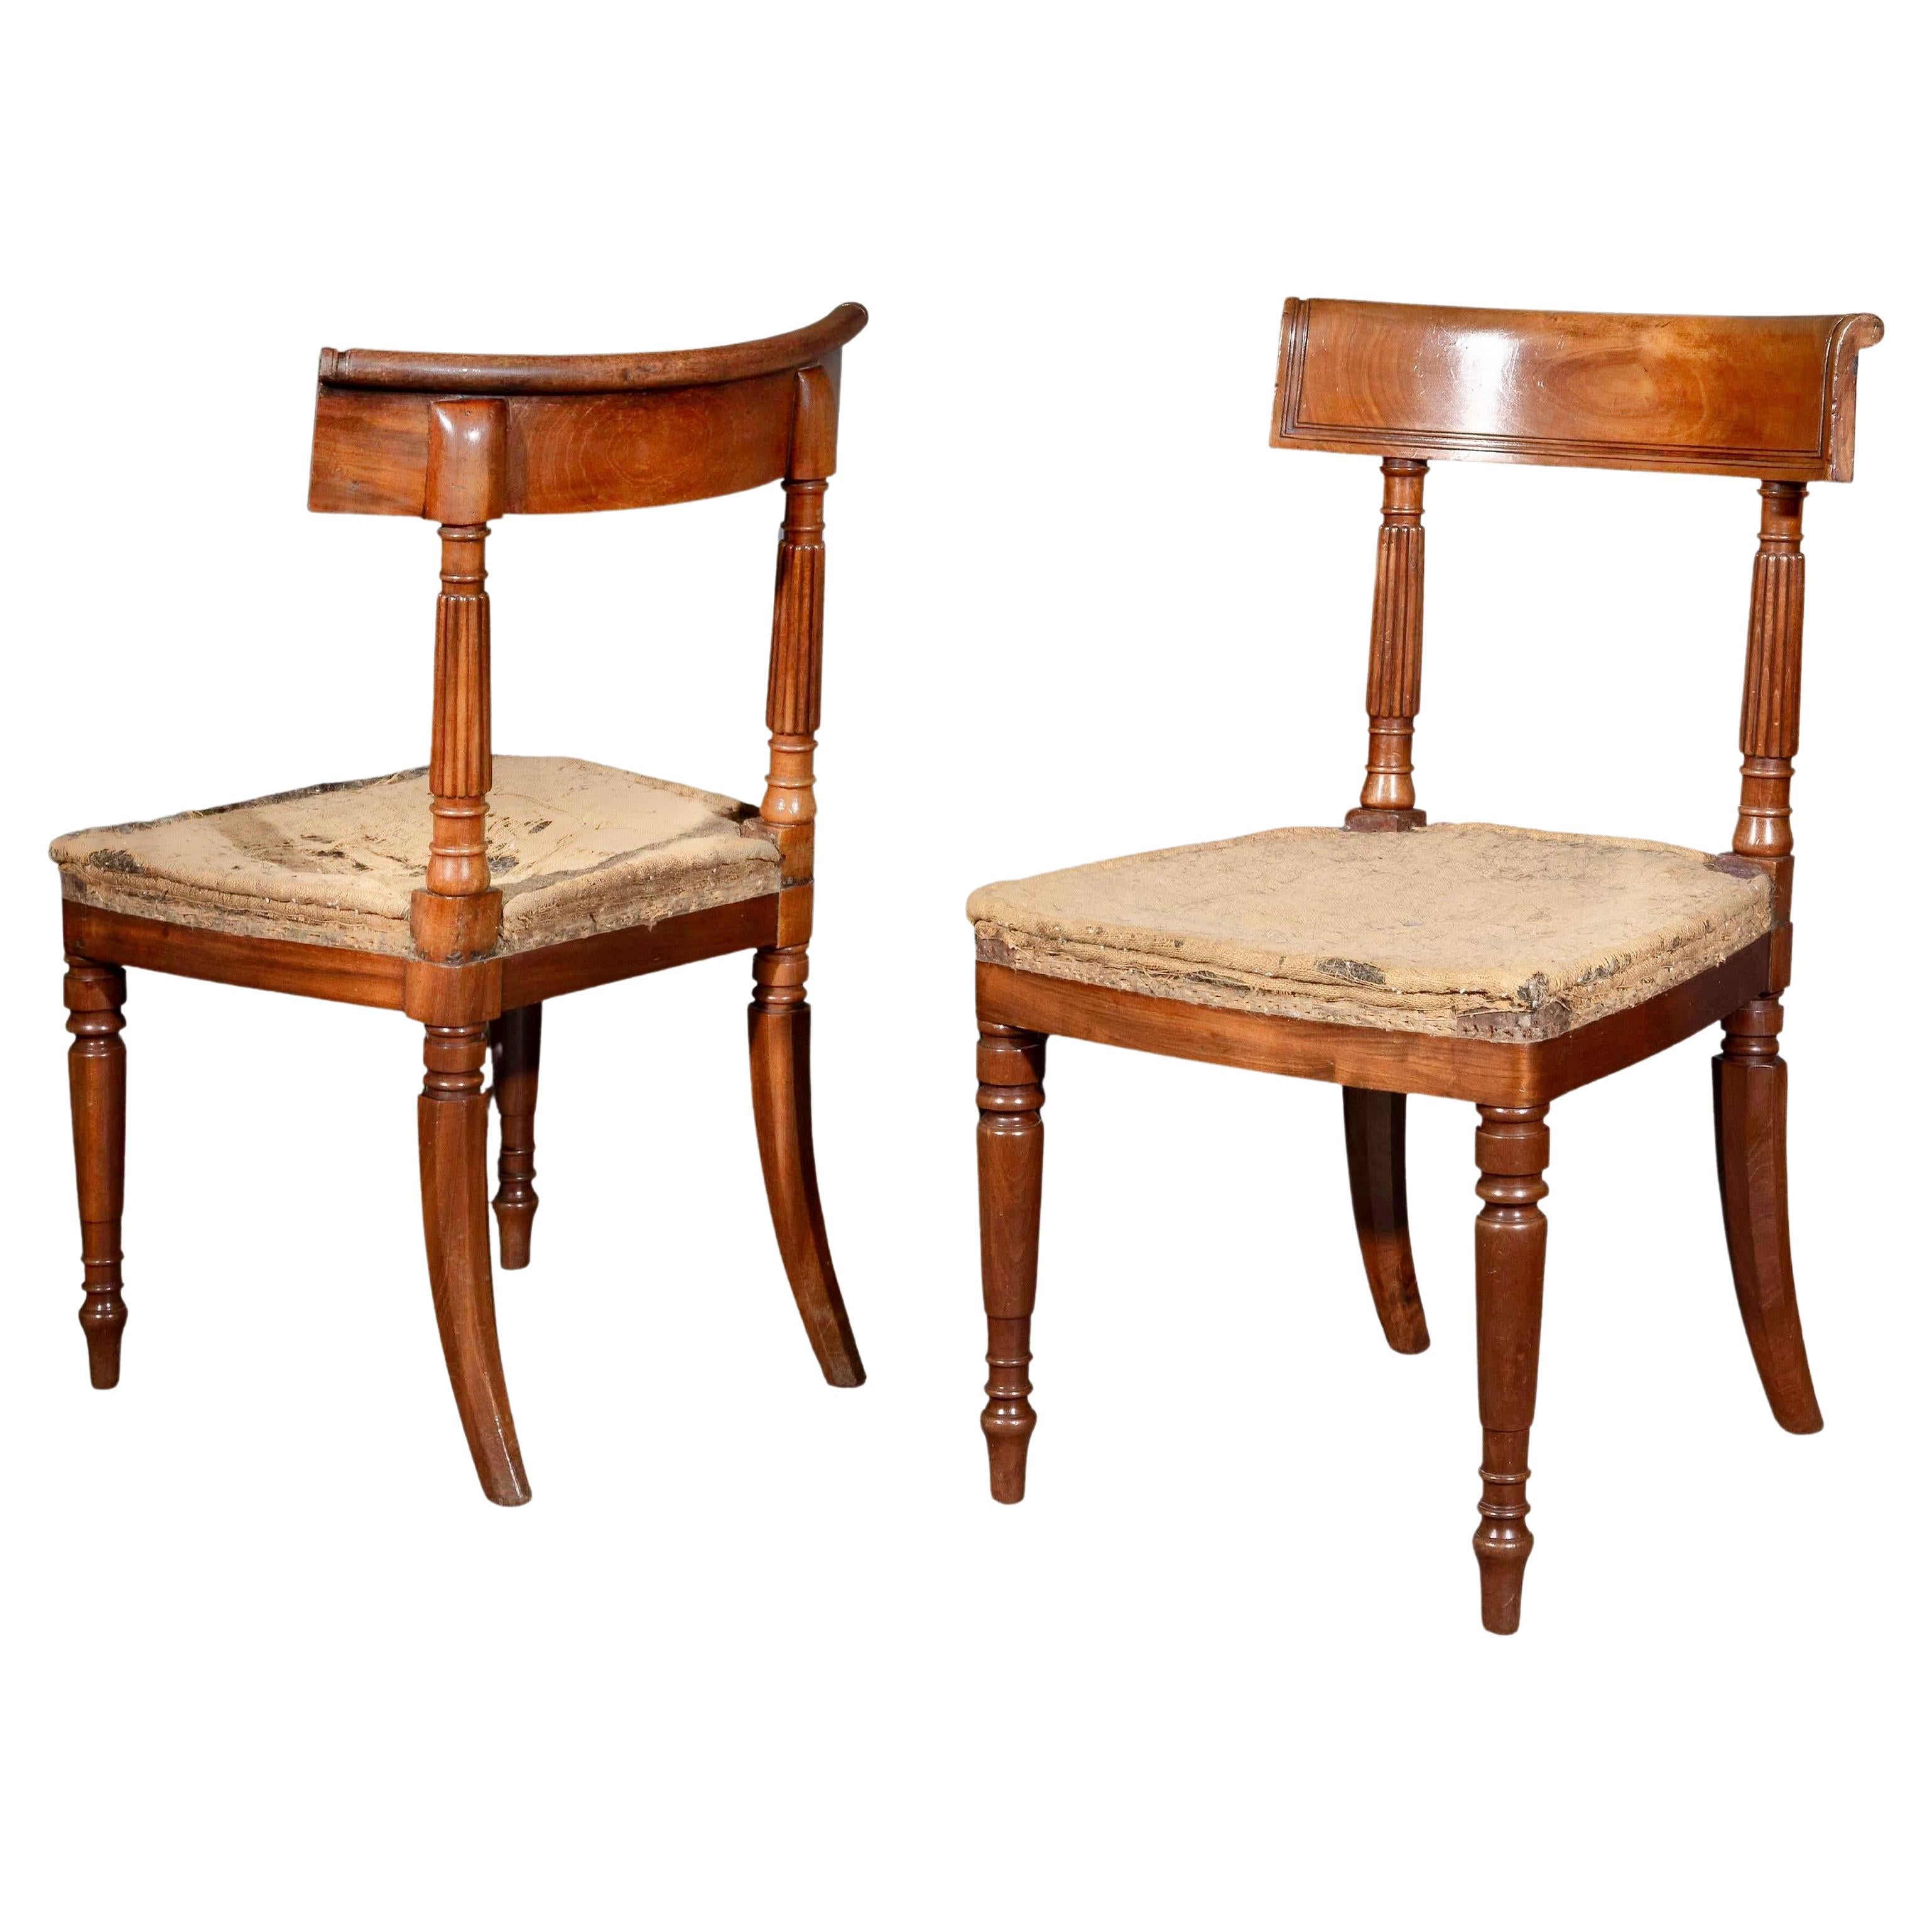 Pair of Regency Chairs, attributed to George Bullock